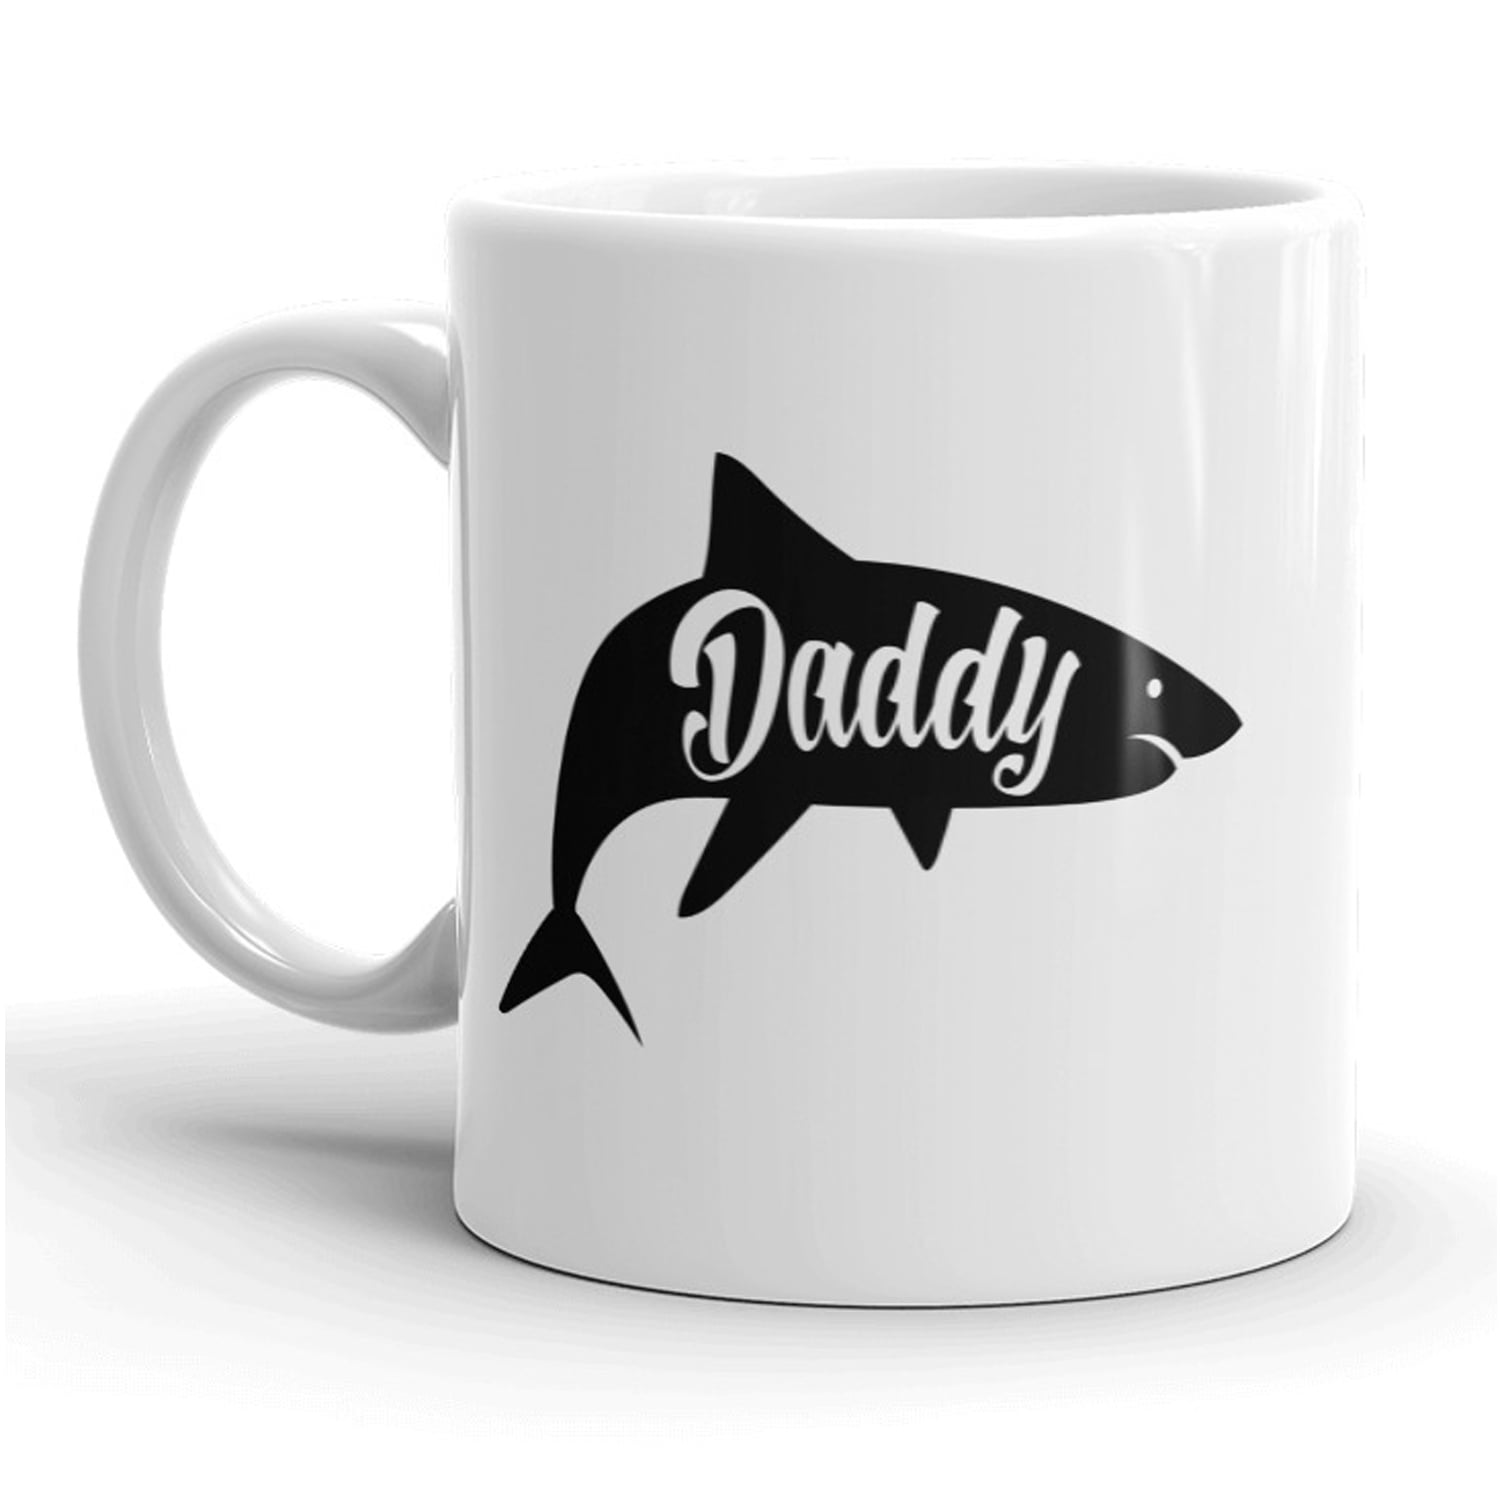 DAD SHARK COFFEE MUG 11oz  CUP FUNNY GIFT IDEA  FATHERS